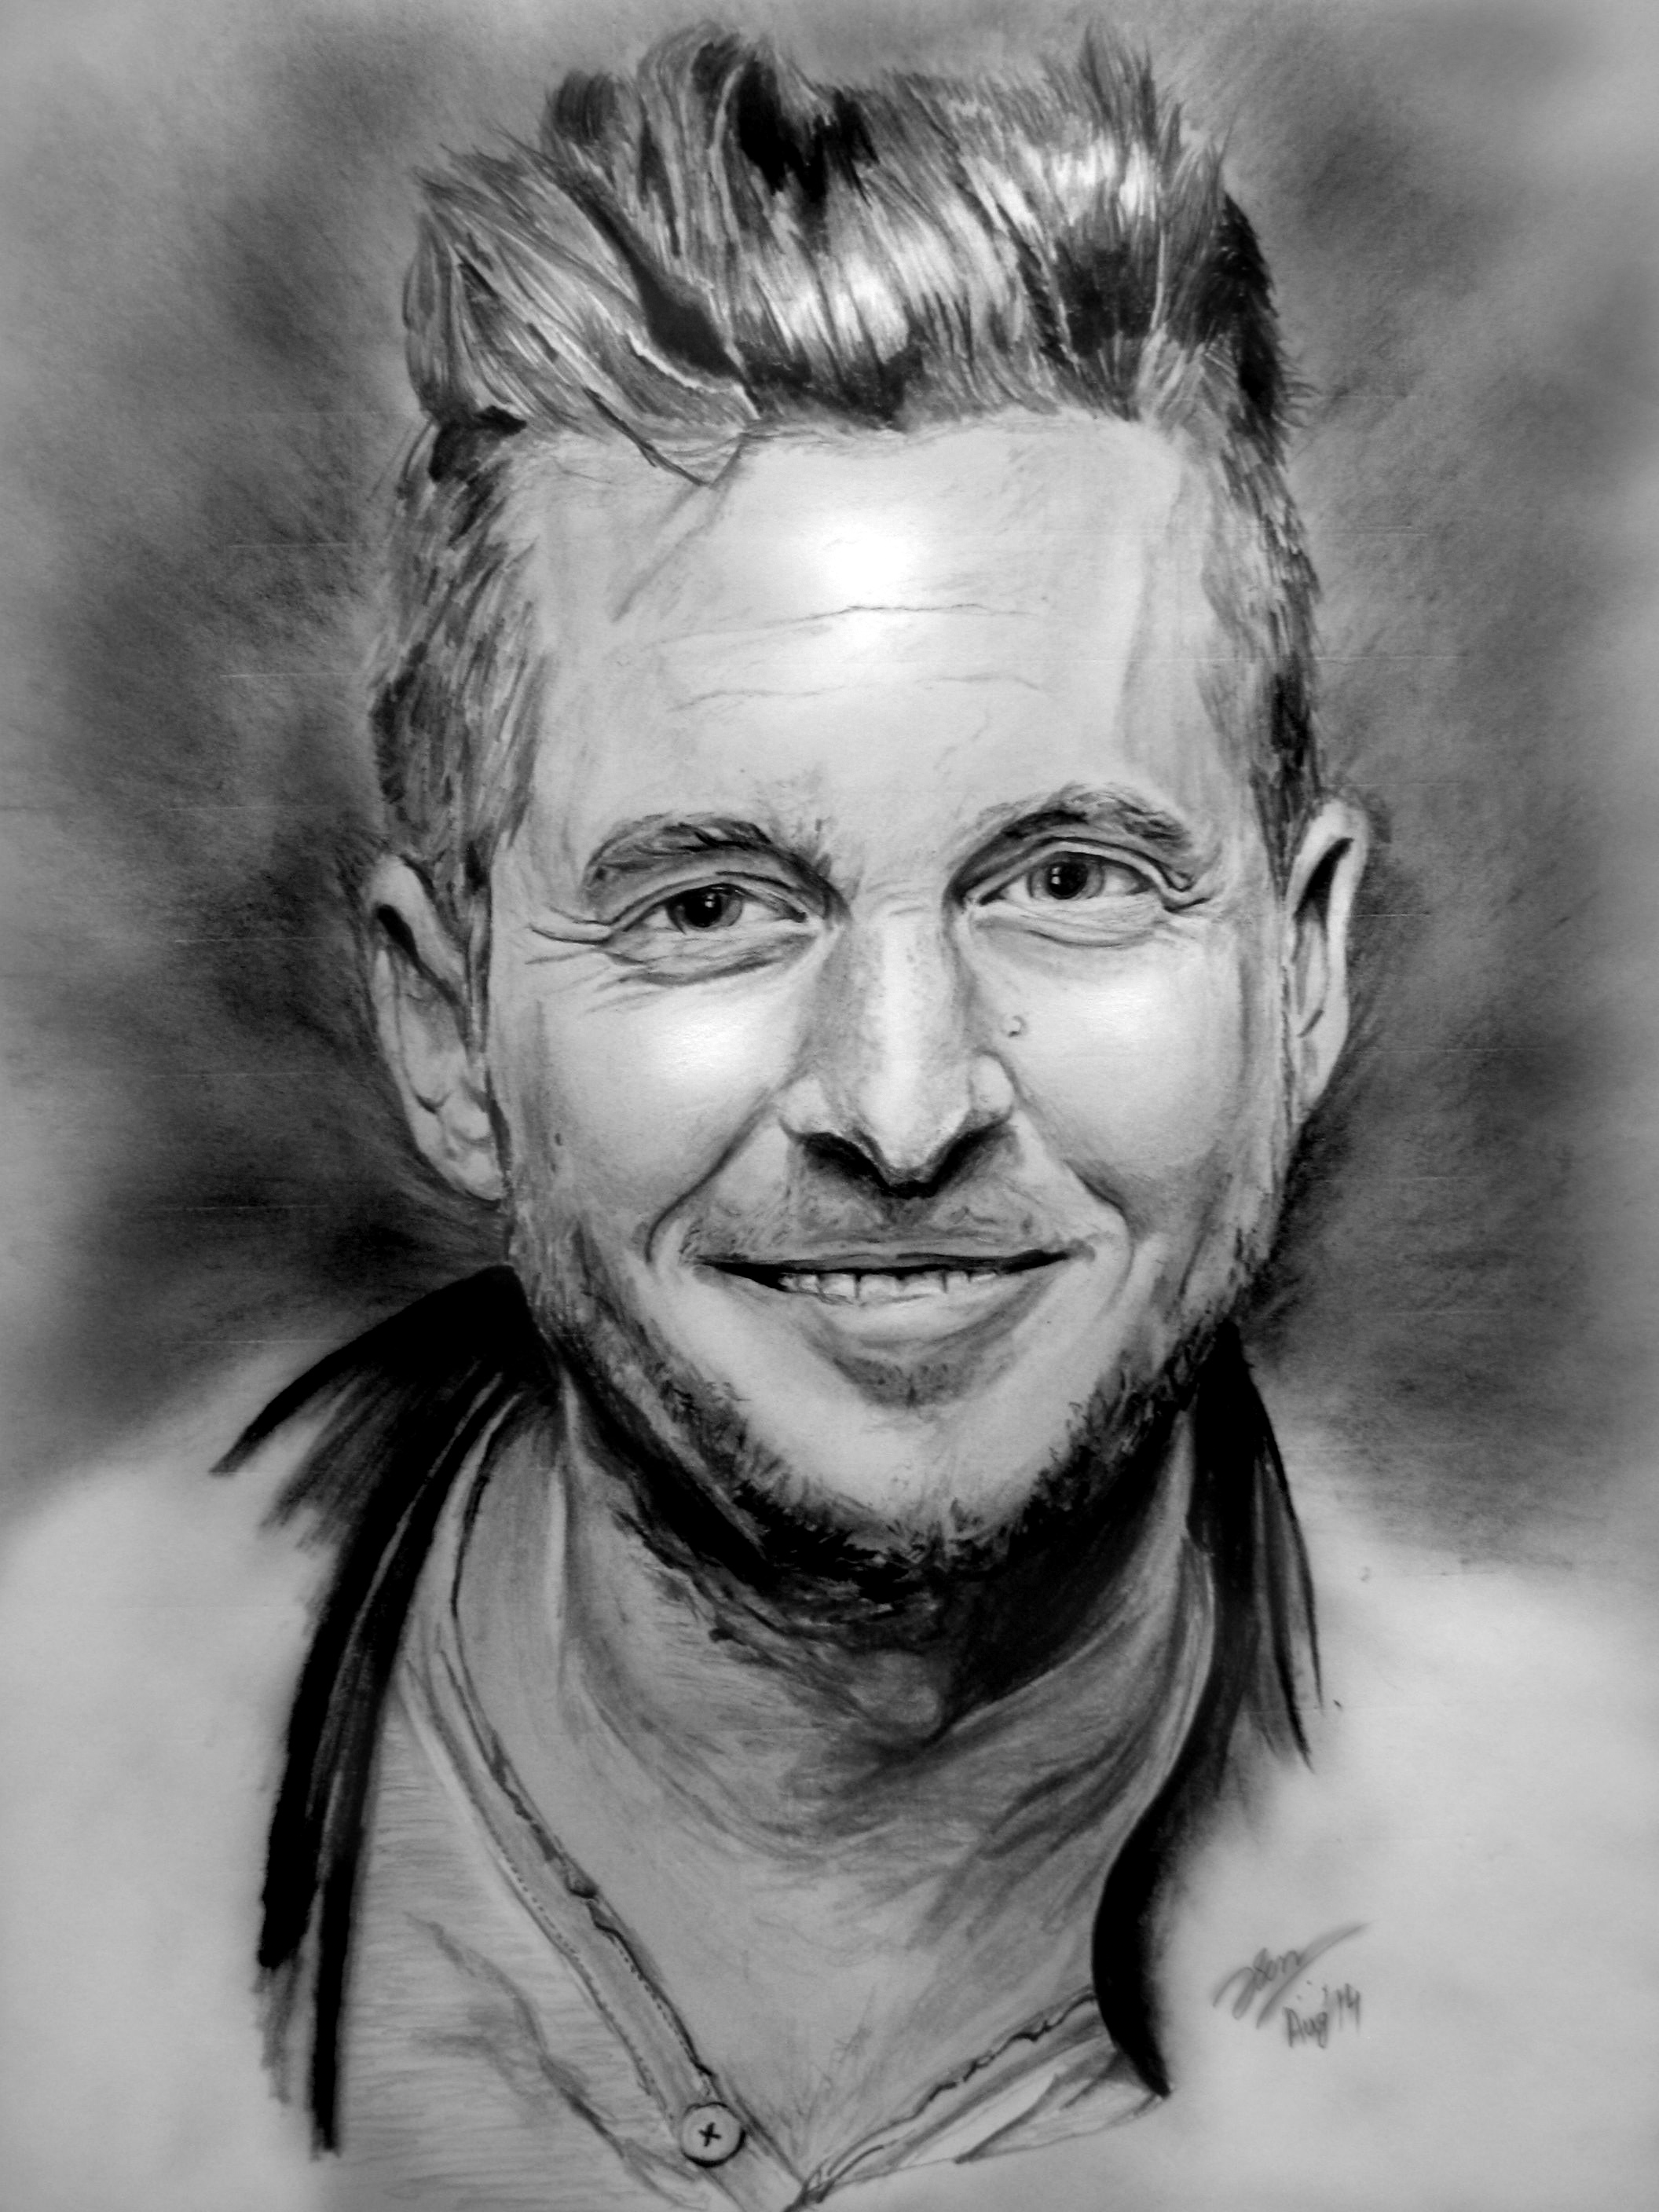 Ryan Tedder Pencil Sketch Portrait By Sathun